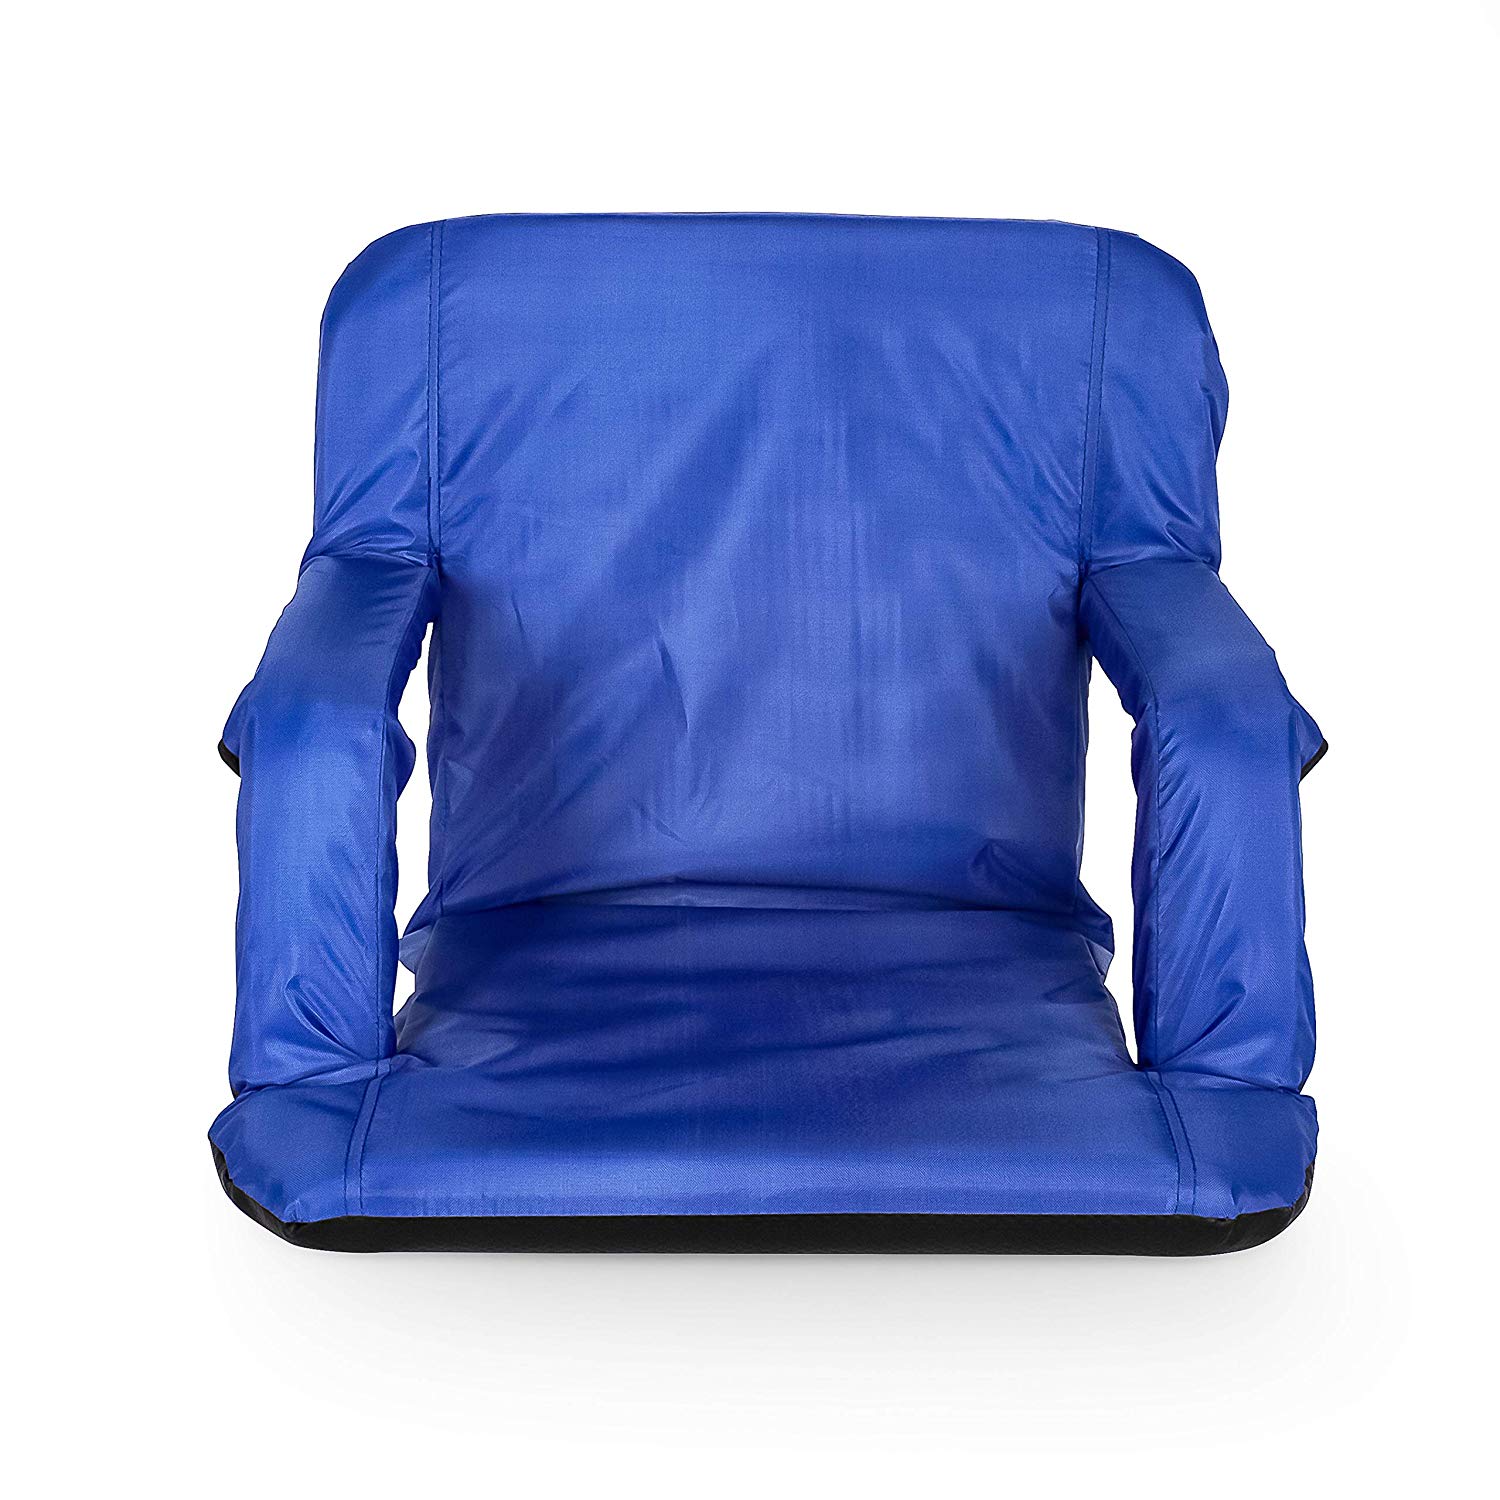 Folding Chair (Blue)